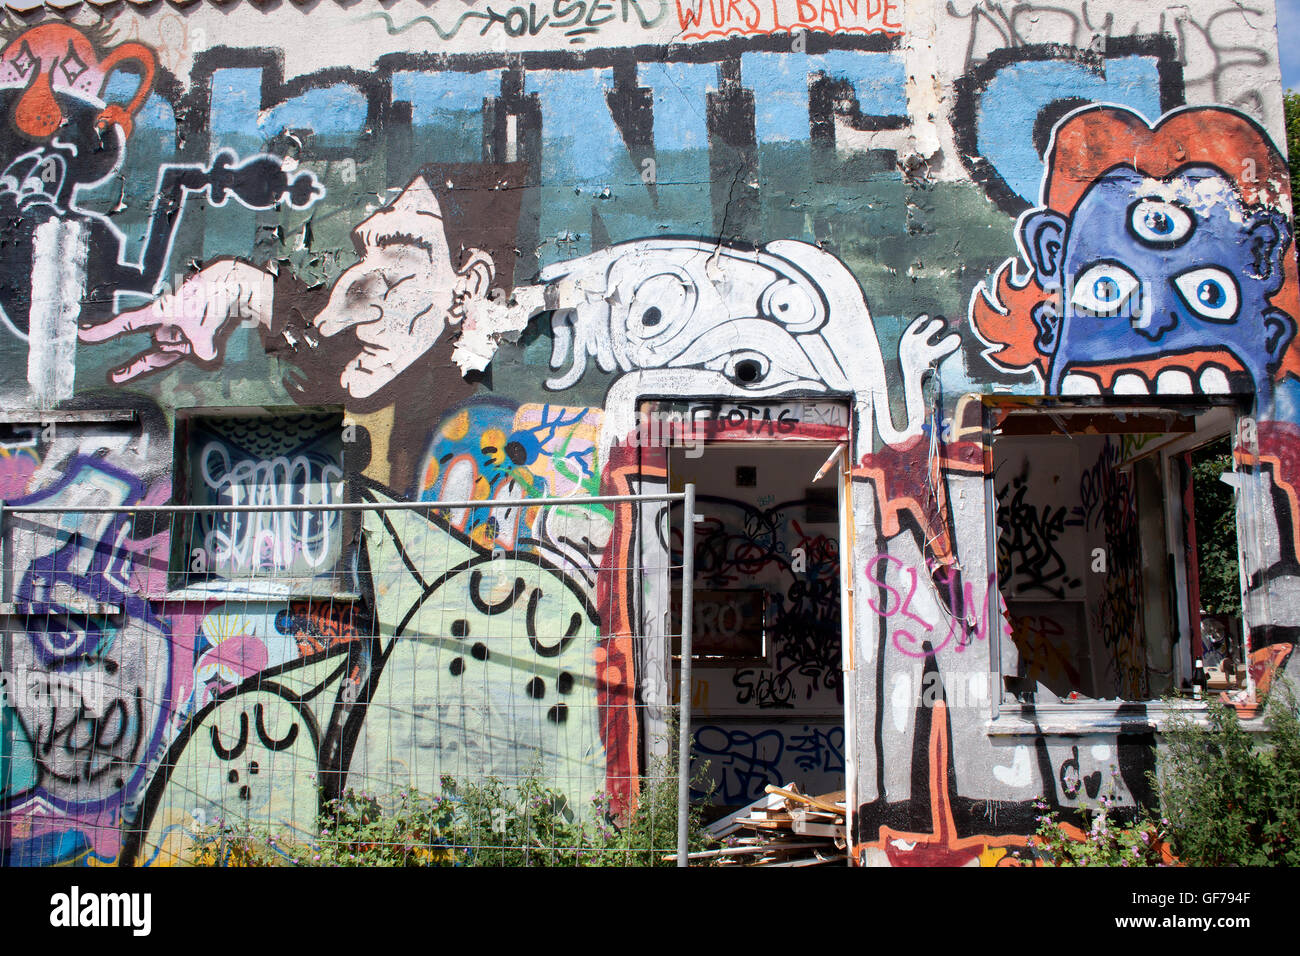 Graffiti art on a wall in Copenhagen Denmark Stock Photo